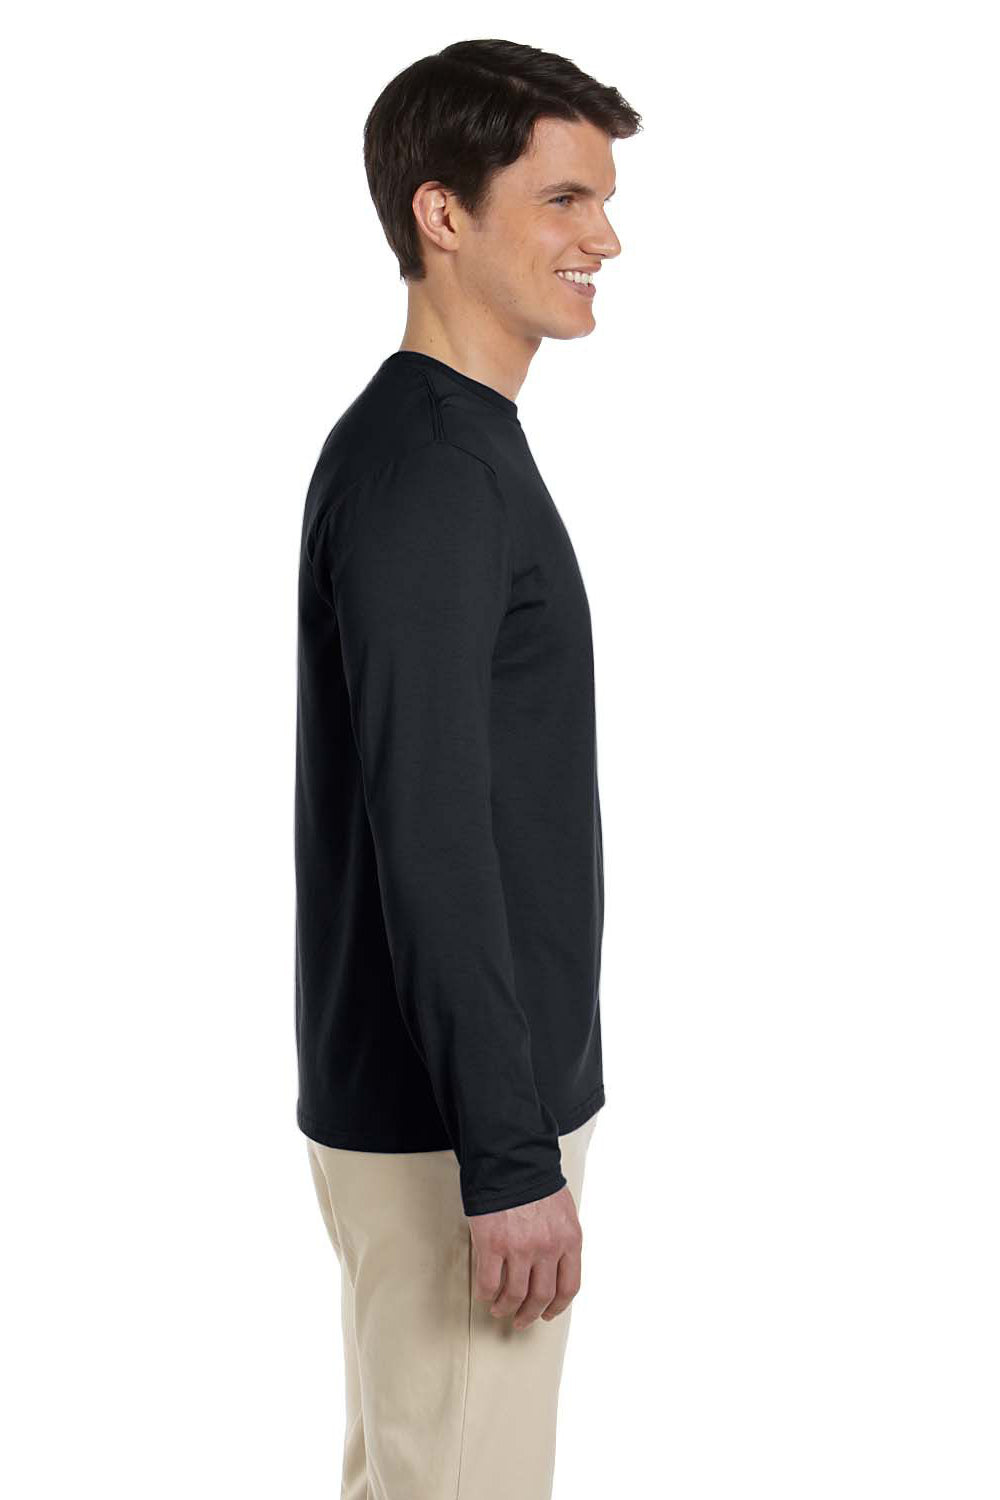 Gildan G644 Mens Softstyle Long Sleeve Crewneck T-Shirt Black Side